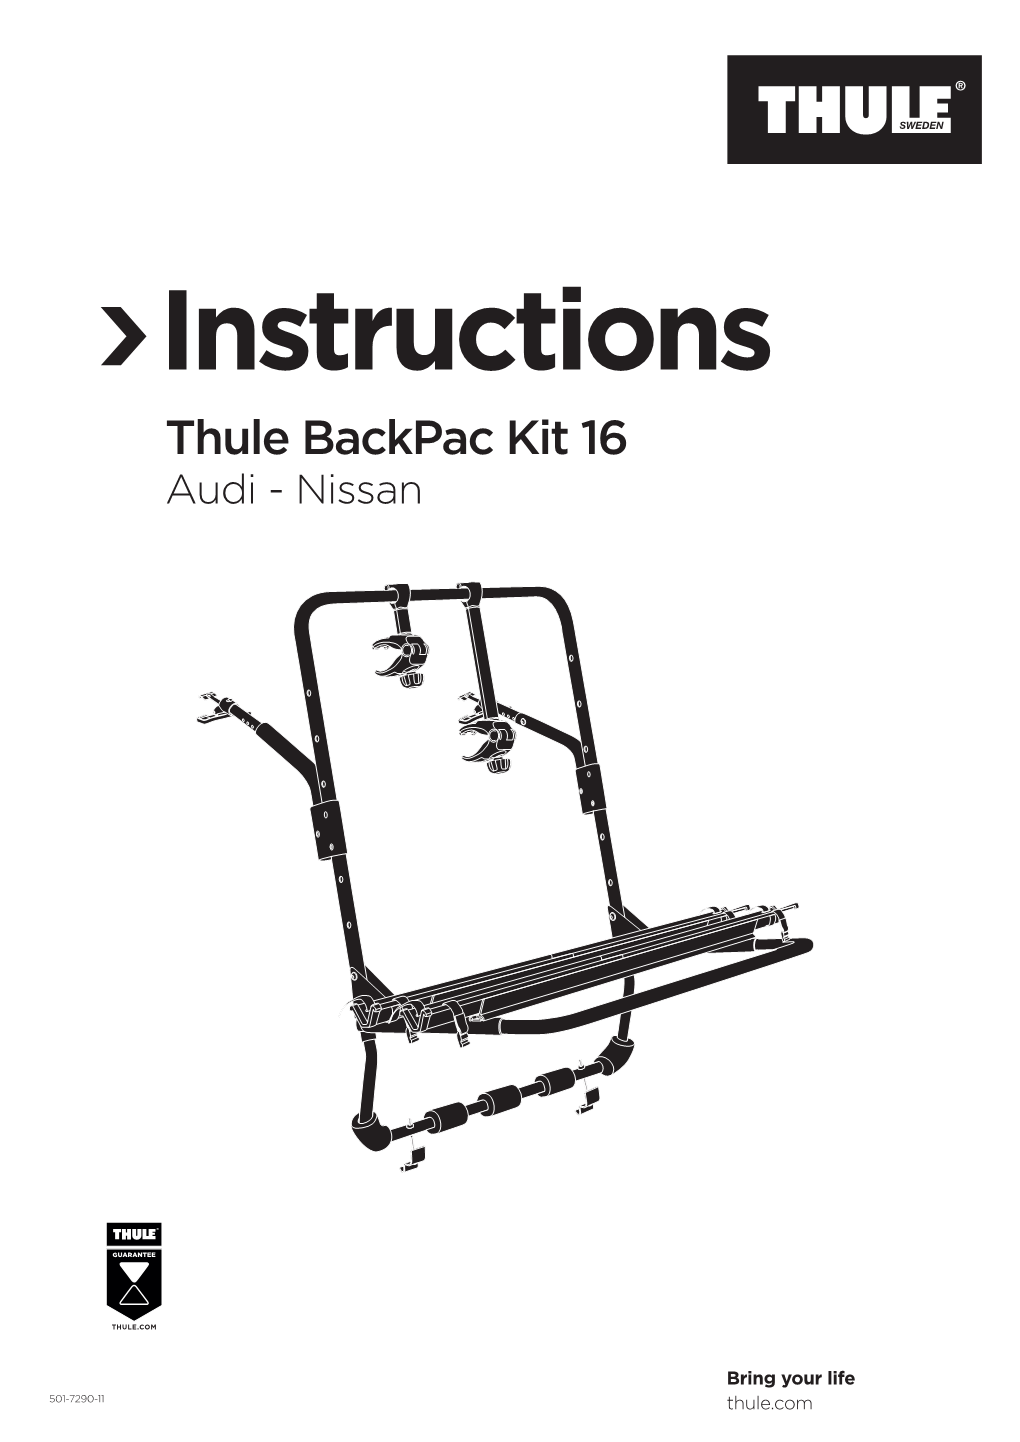 Instructions Thule Backpac Kit 16 Audi - Nissan